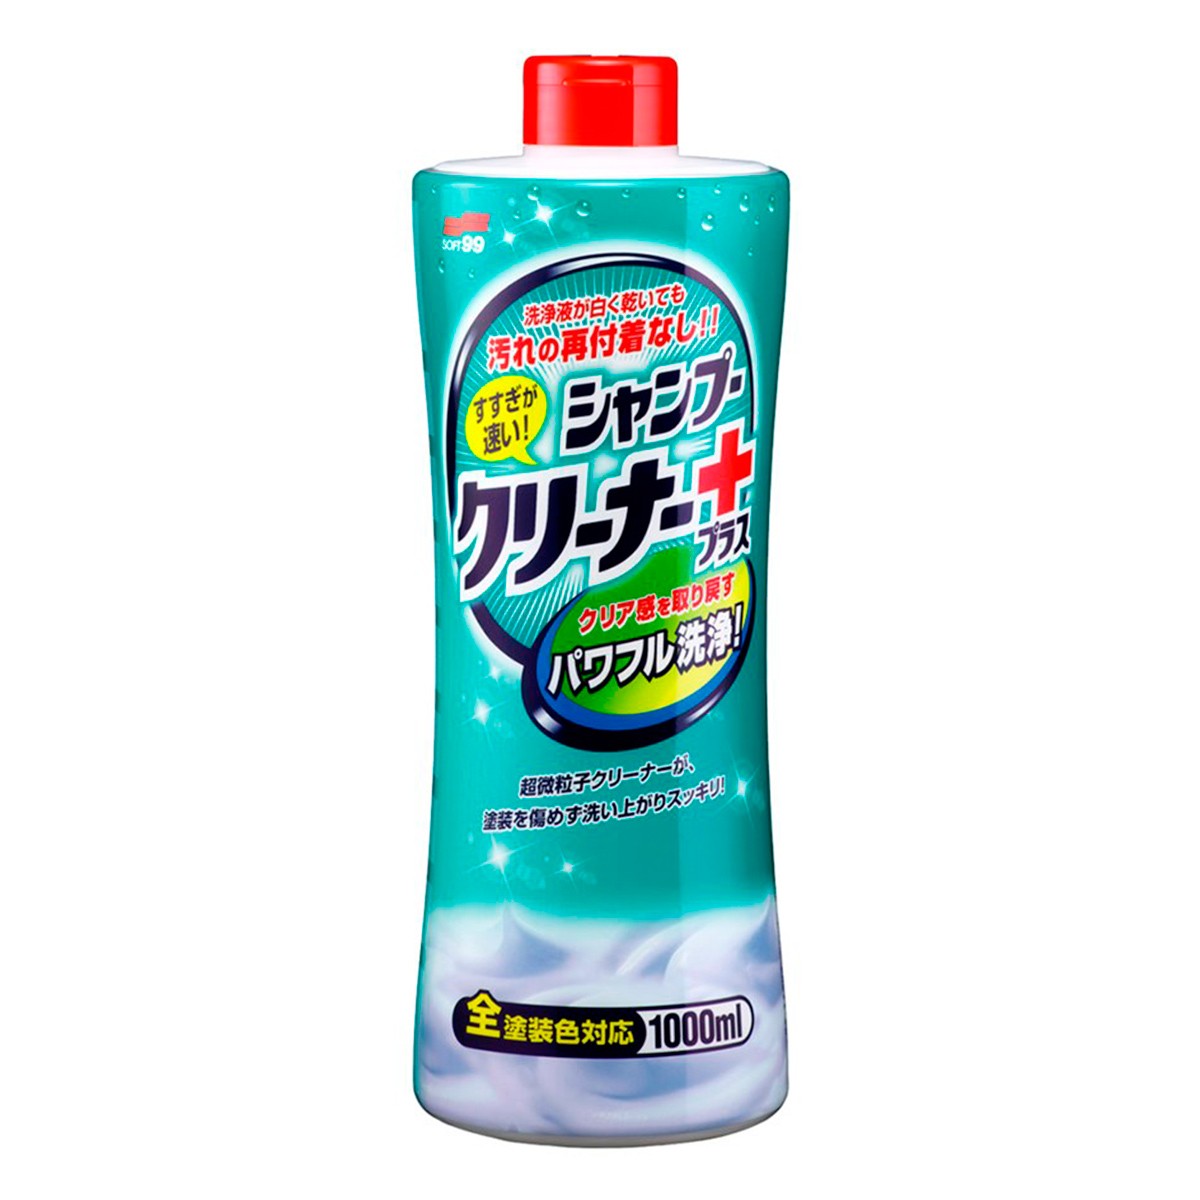 Shampoo Cleaner - Soft99